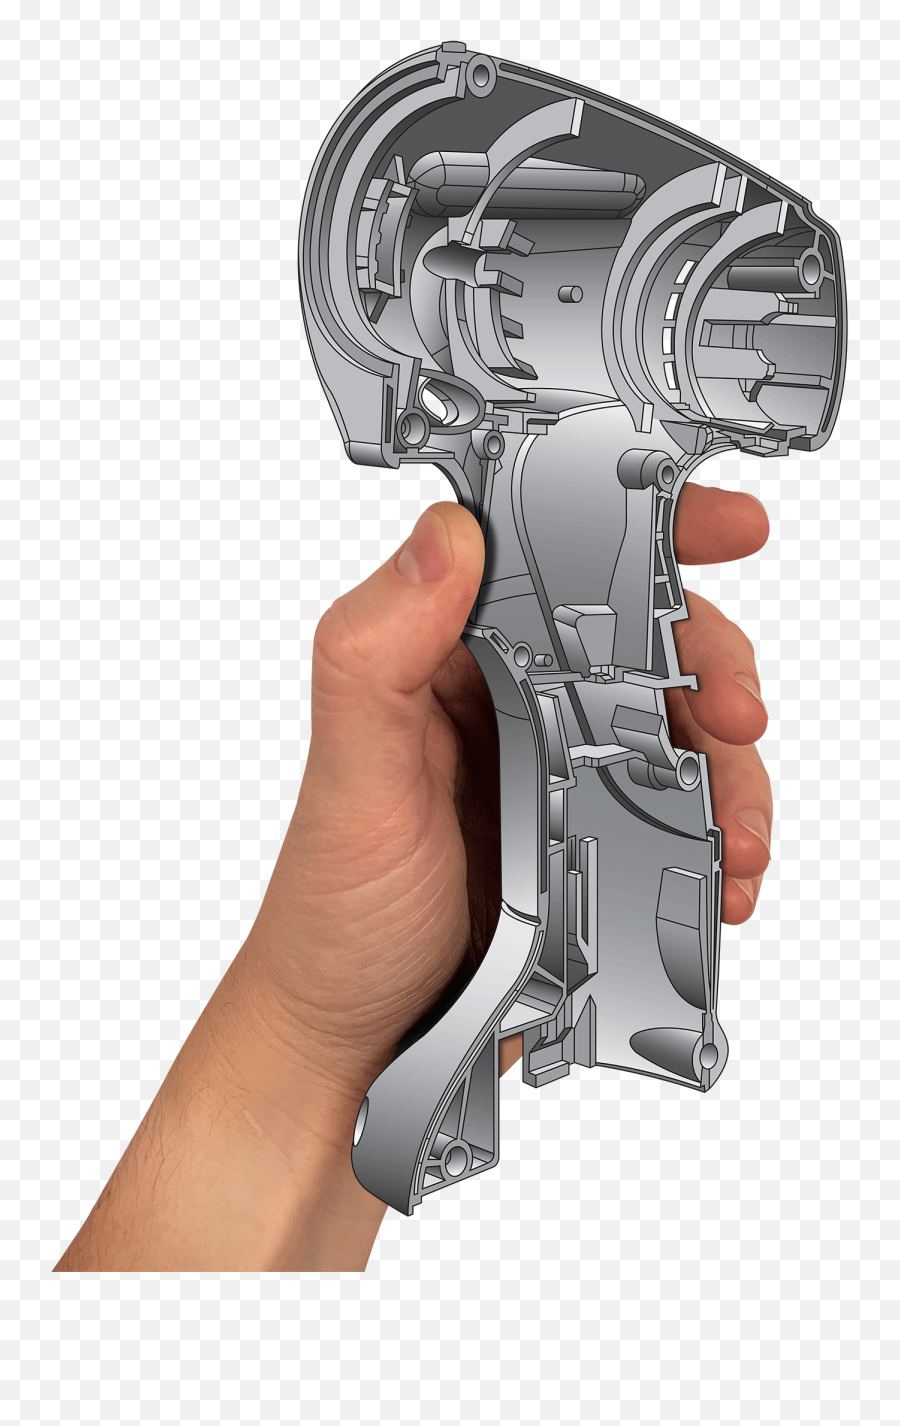 Scanning Services 3d Scanning U0026 Measurement Services T3dmc - Aluminium Alloy Emoji,Transparent Hand Holding Gun